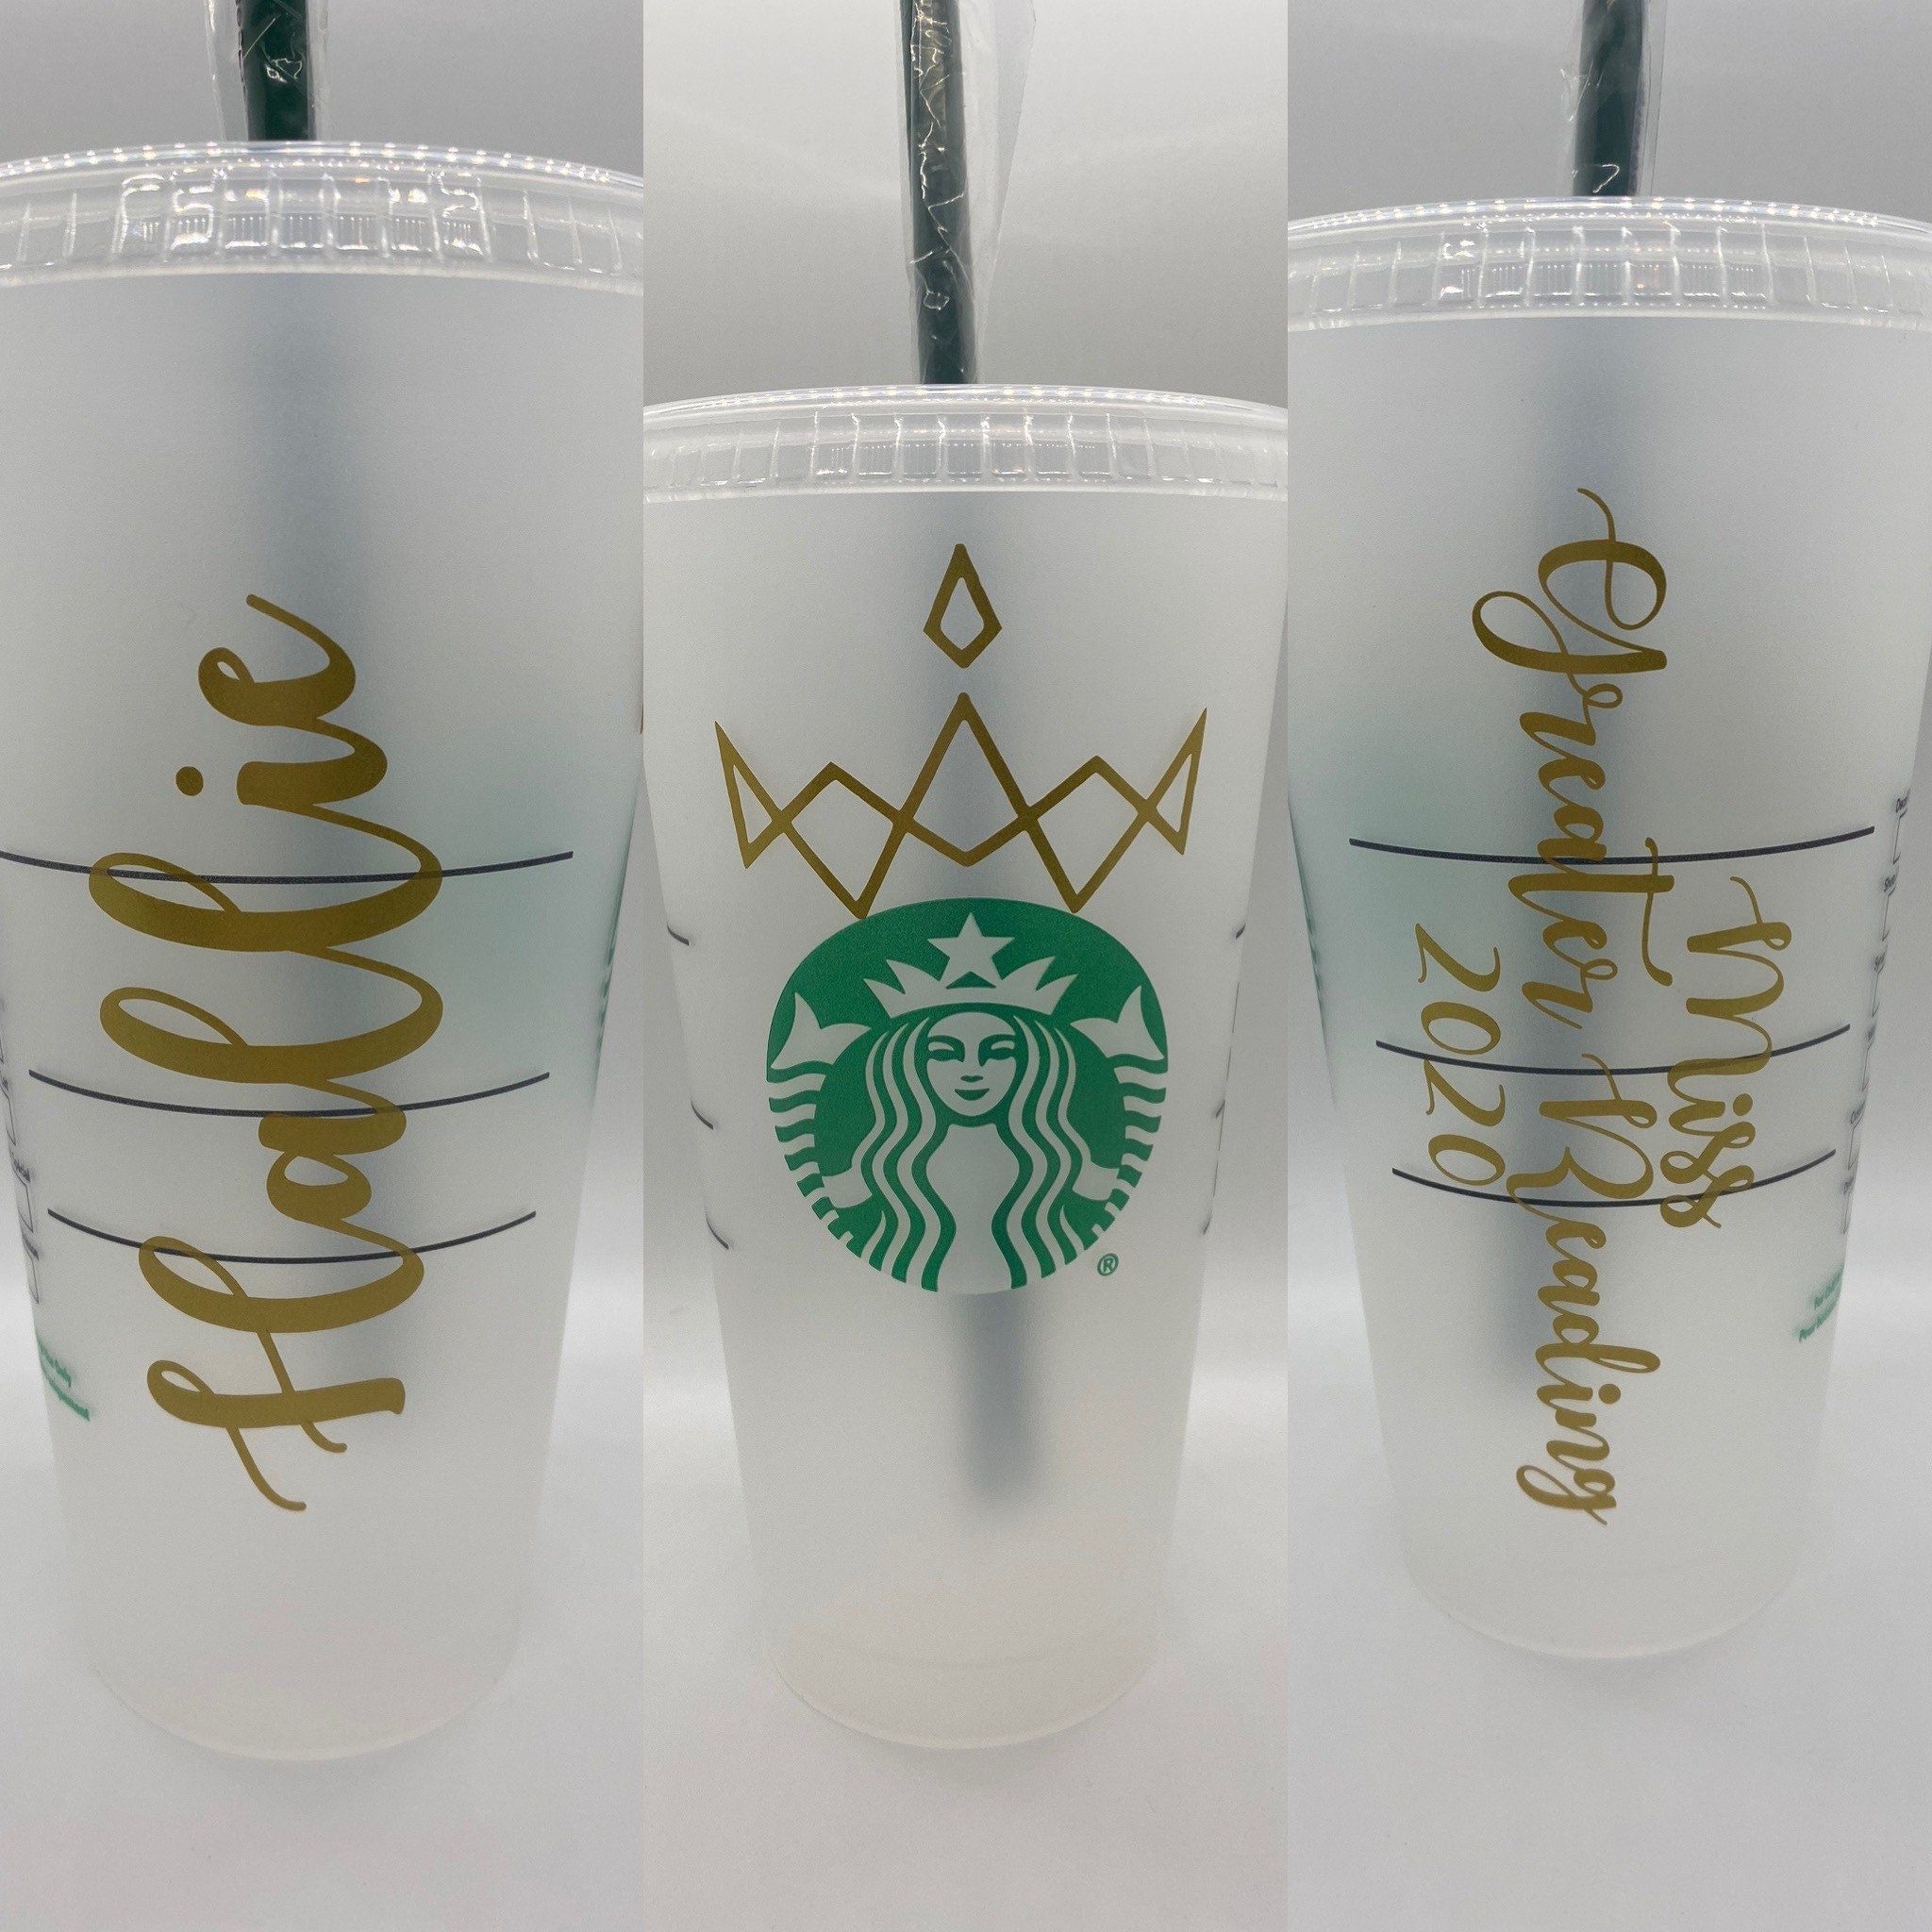 Miss America Starbucks Cup